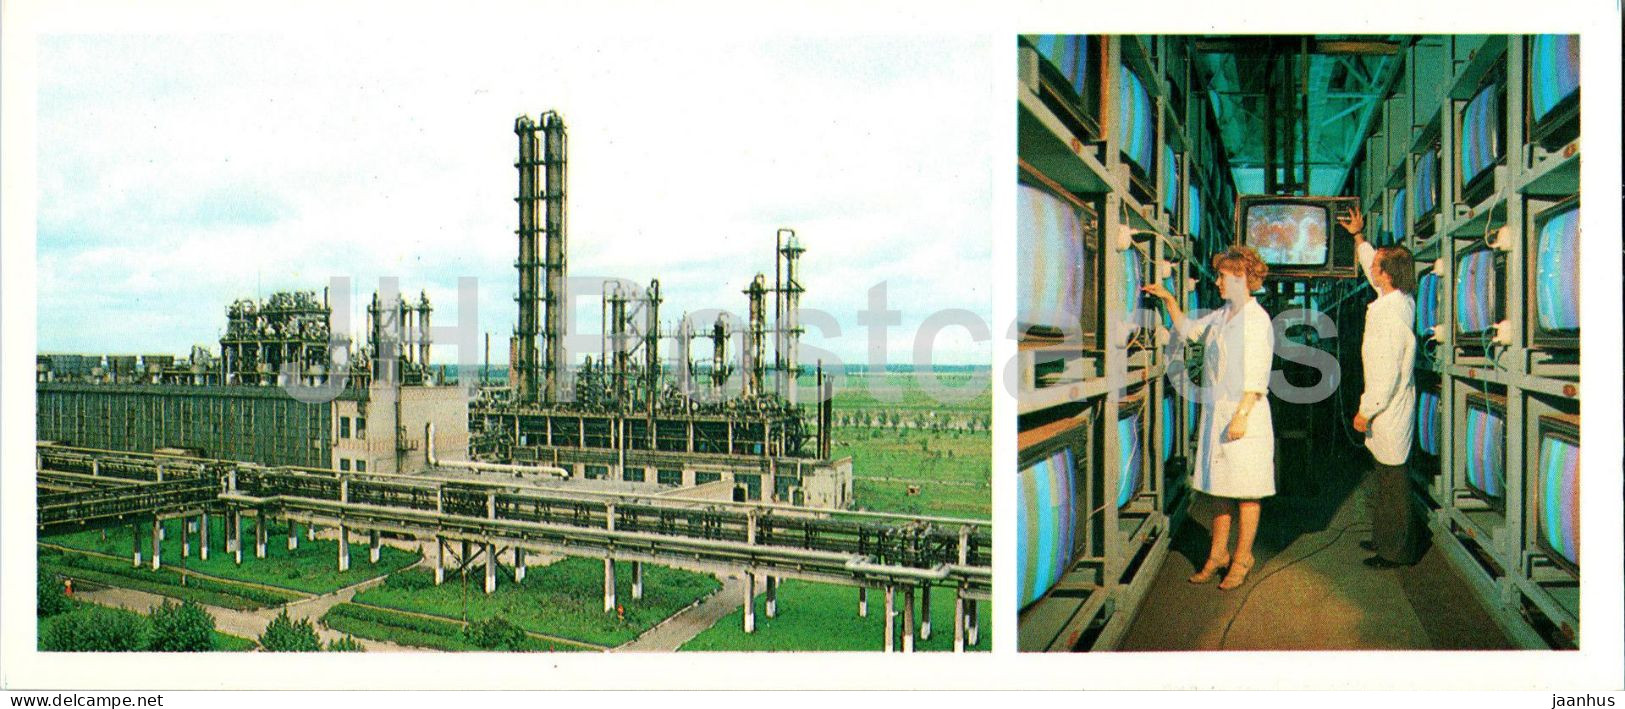 Omsk - Petrochemical Enterprises - Omsk TV Factory - 1982 - Russia USSR - Unused - Russie